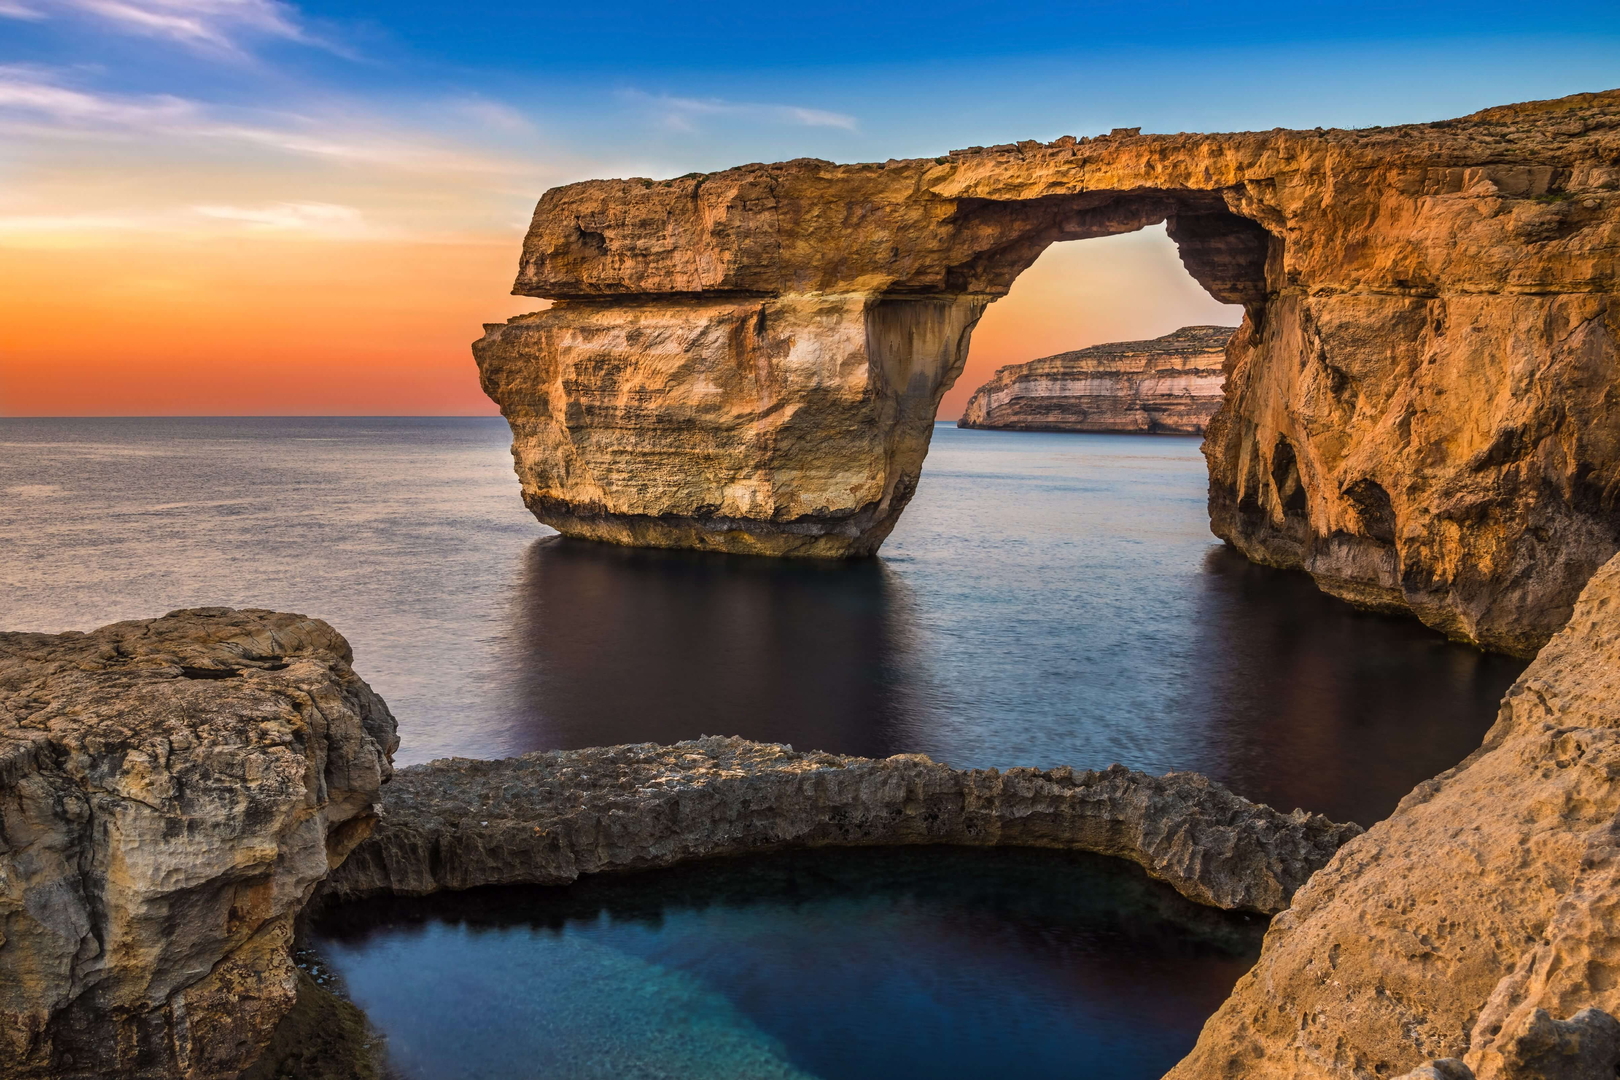 The Azure Window, an iconic landmark in Malta